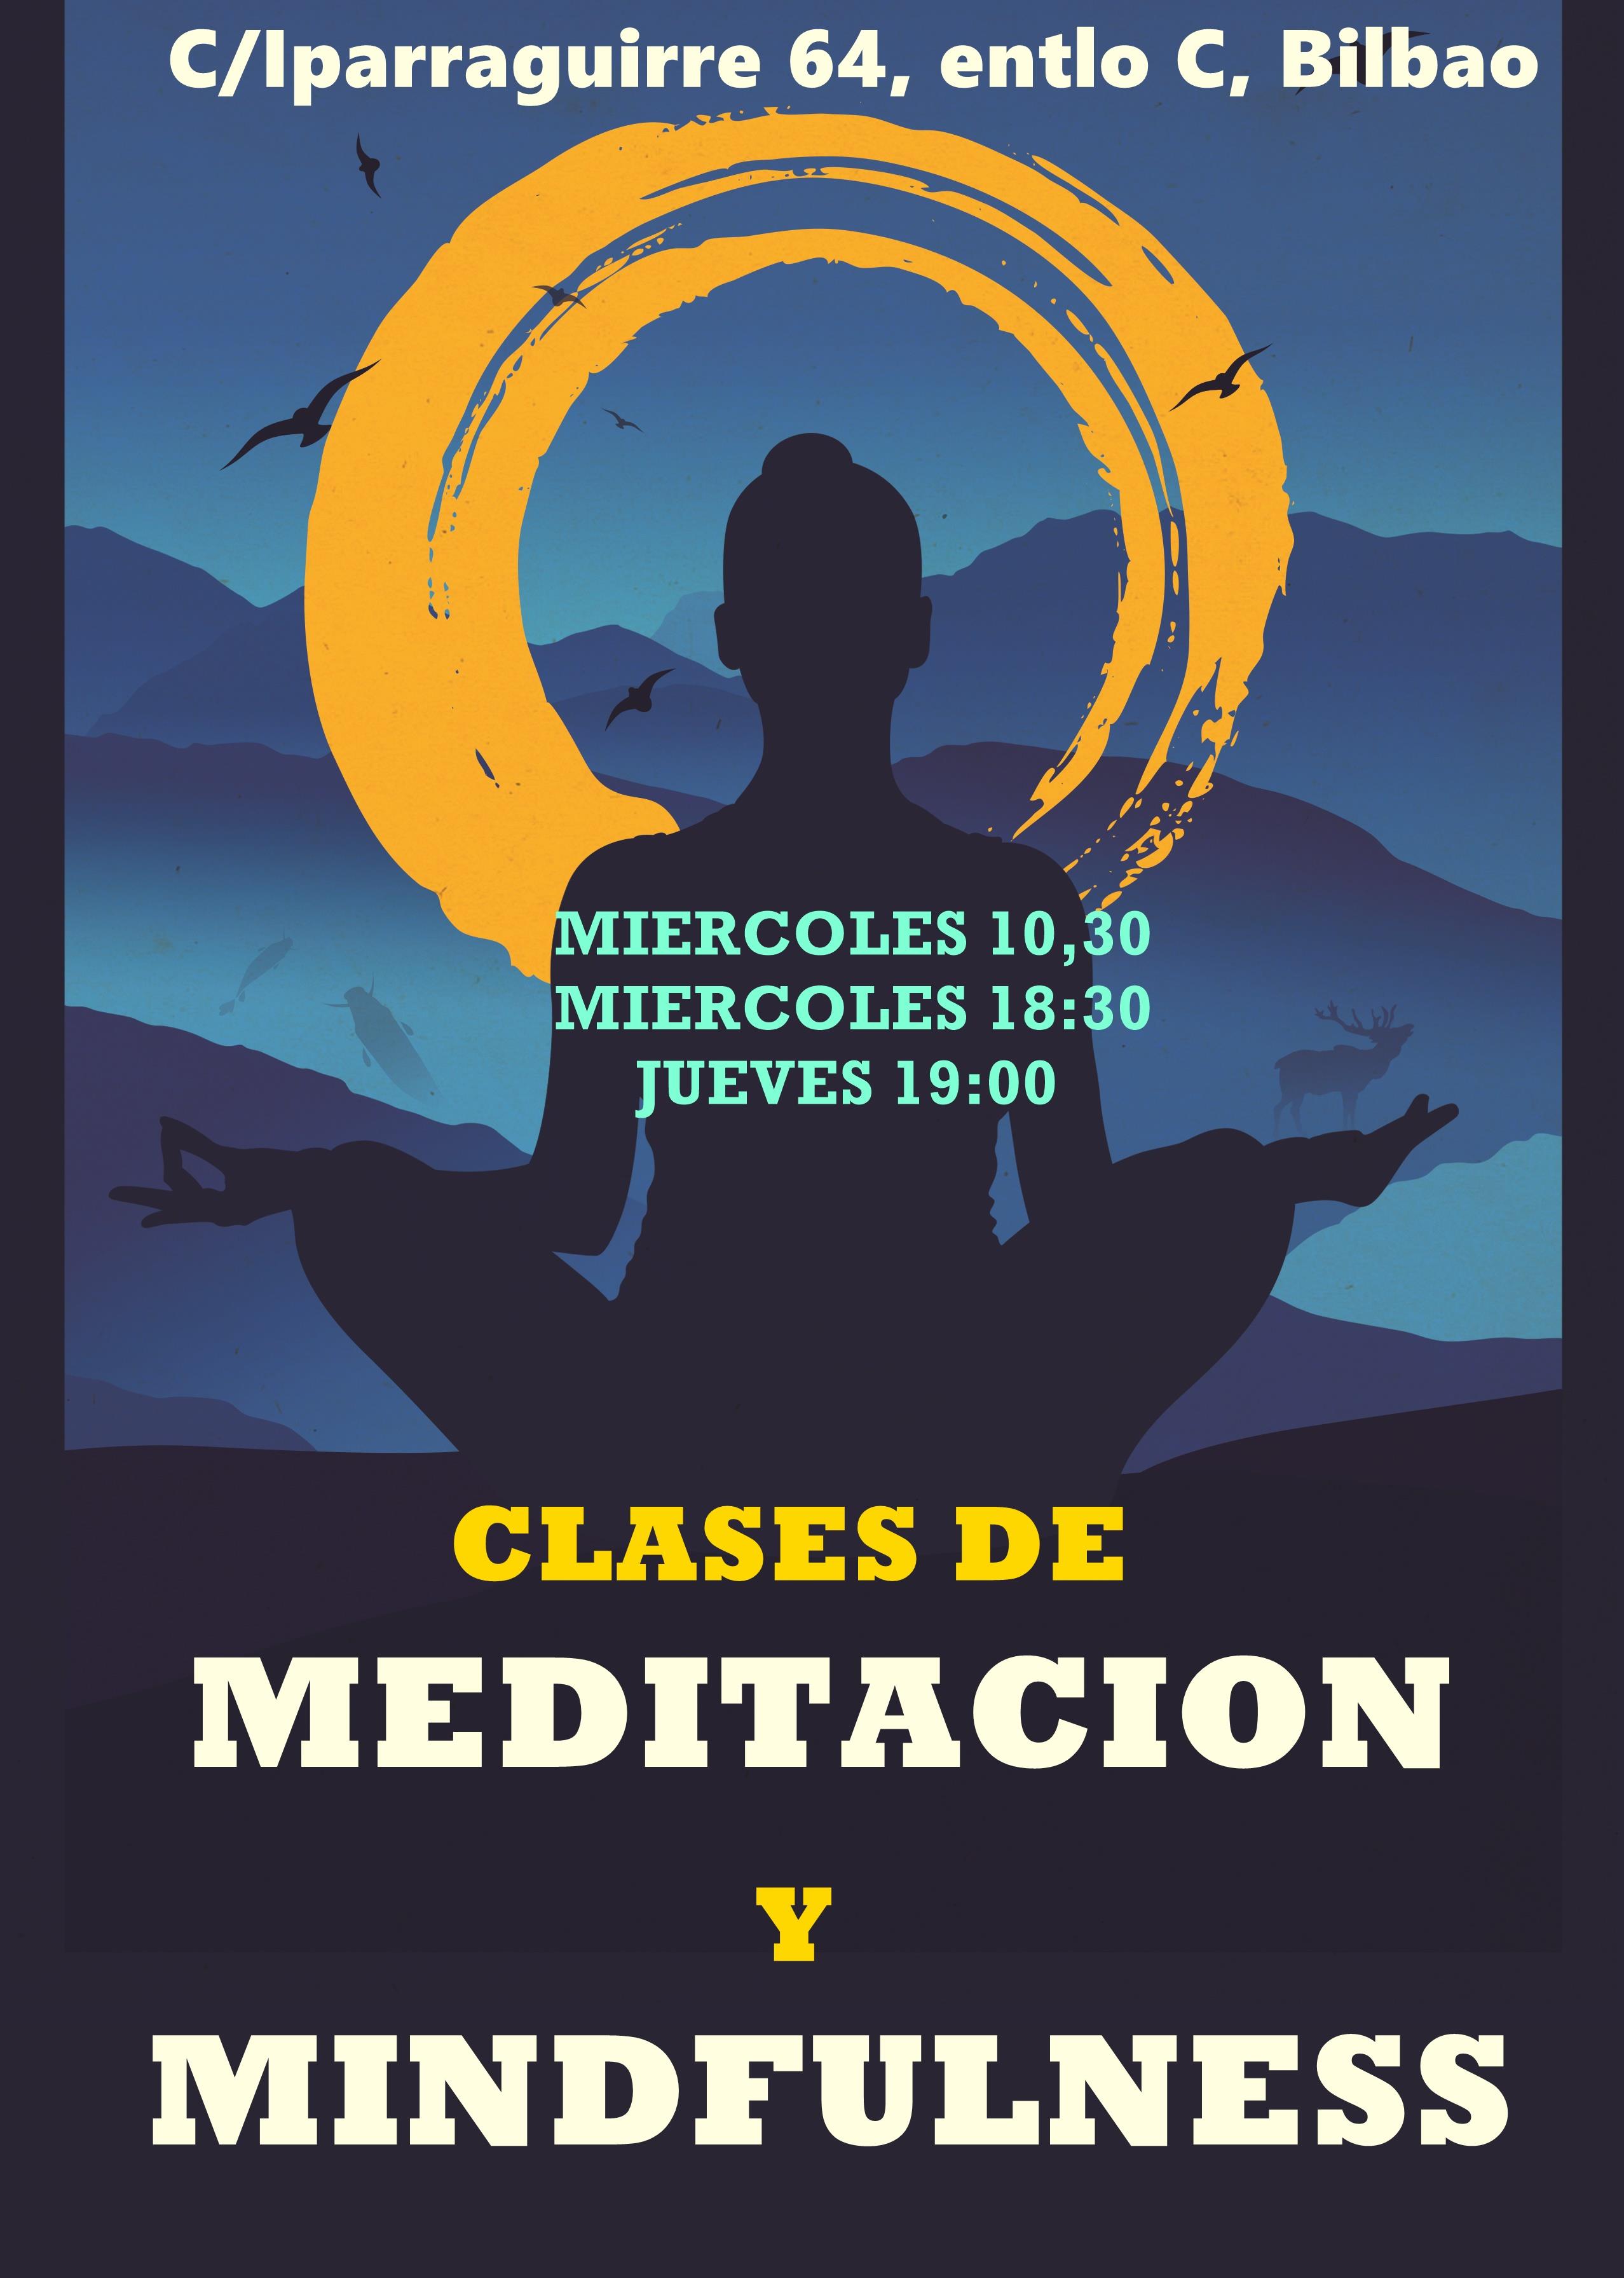 CLASES DE MEDITACION Y MINDFULNESS